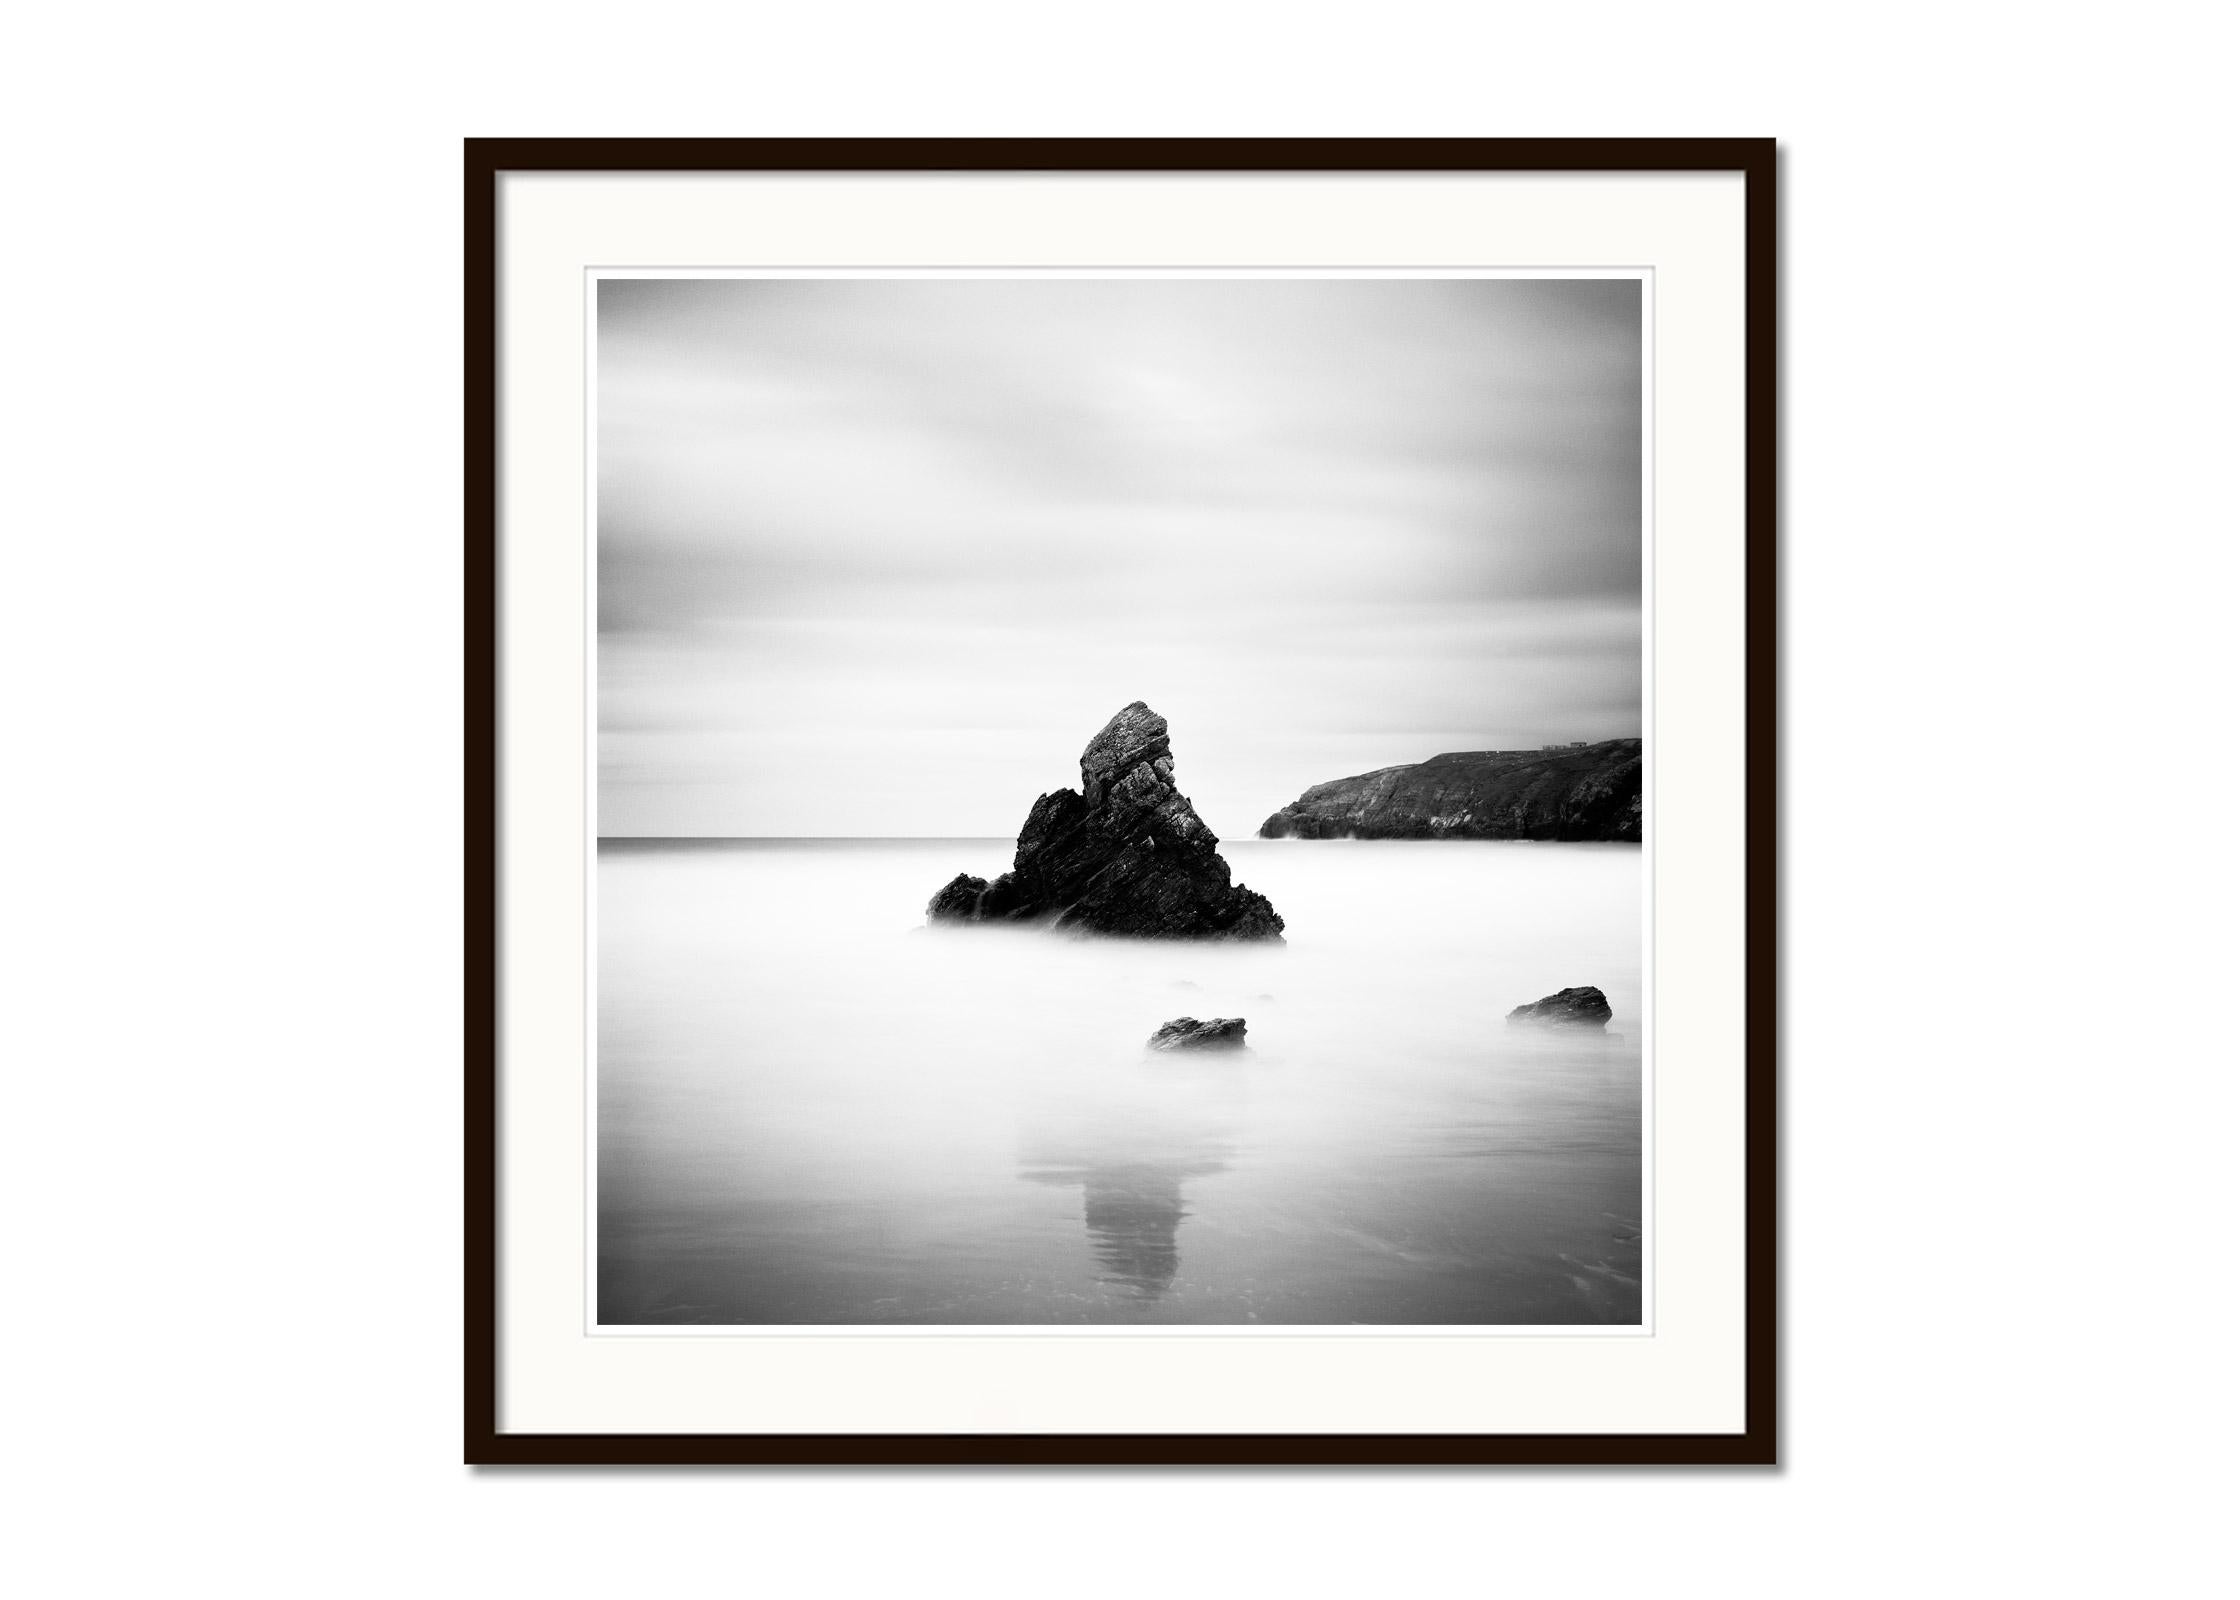 Sea Stack, scottish rocky coast, beach, Scotland, B&W landscape art photography - Gray Black and White Photograph by Gerald Berghammer